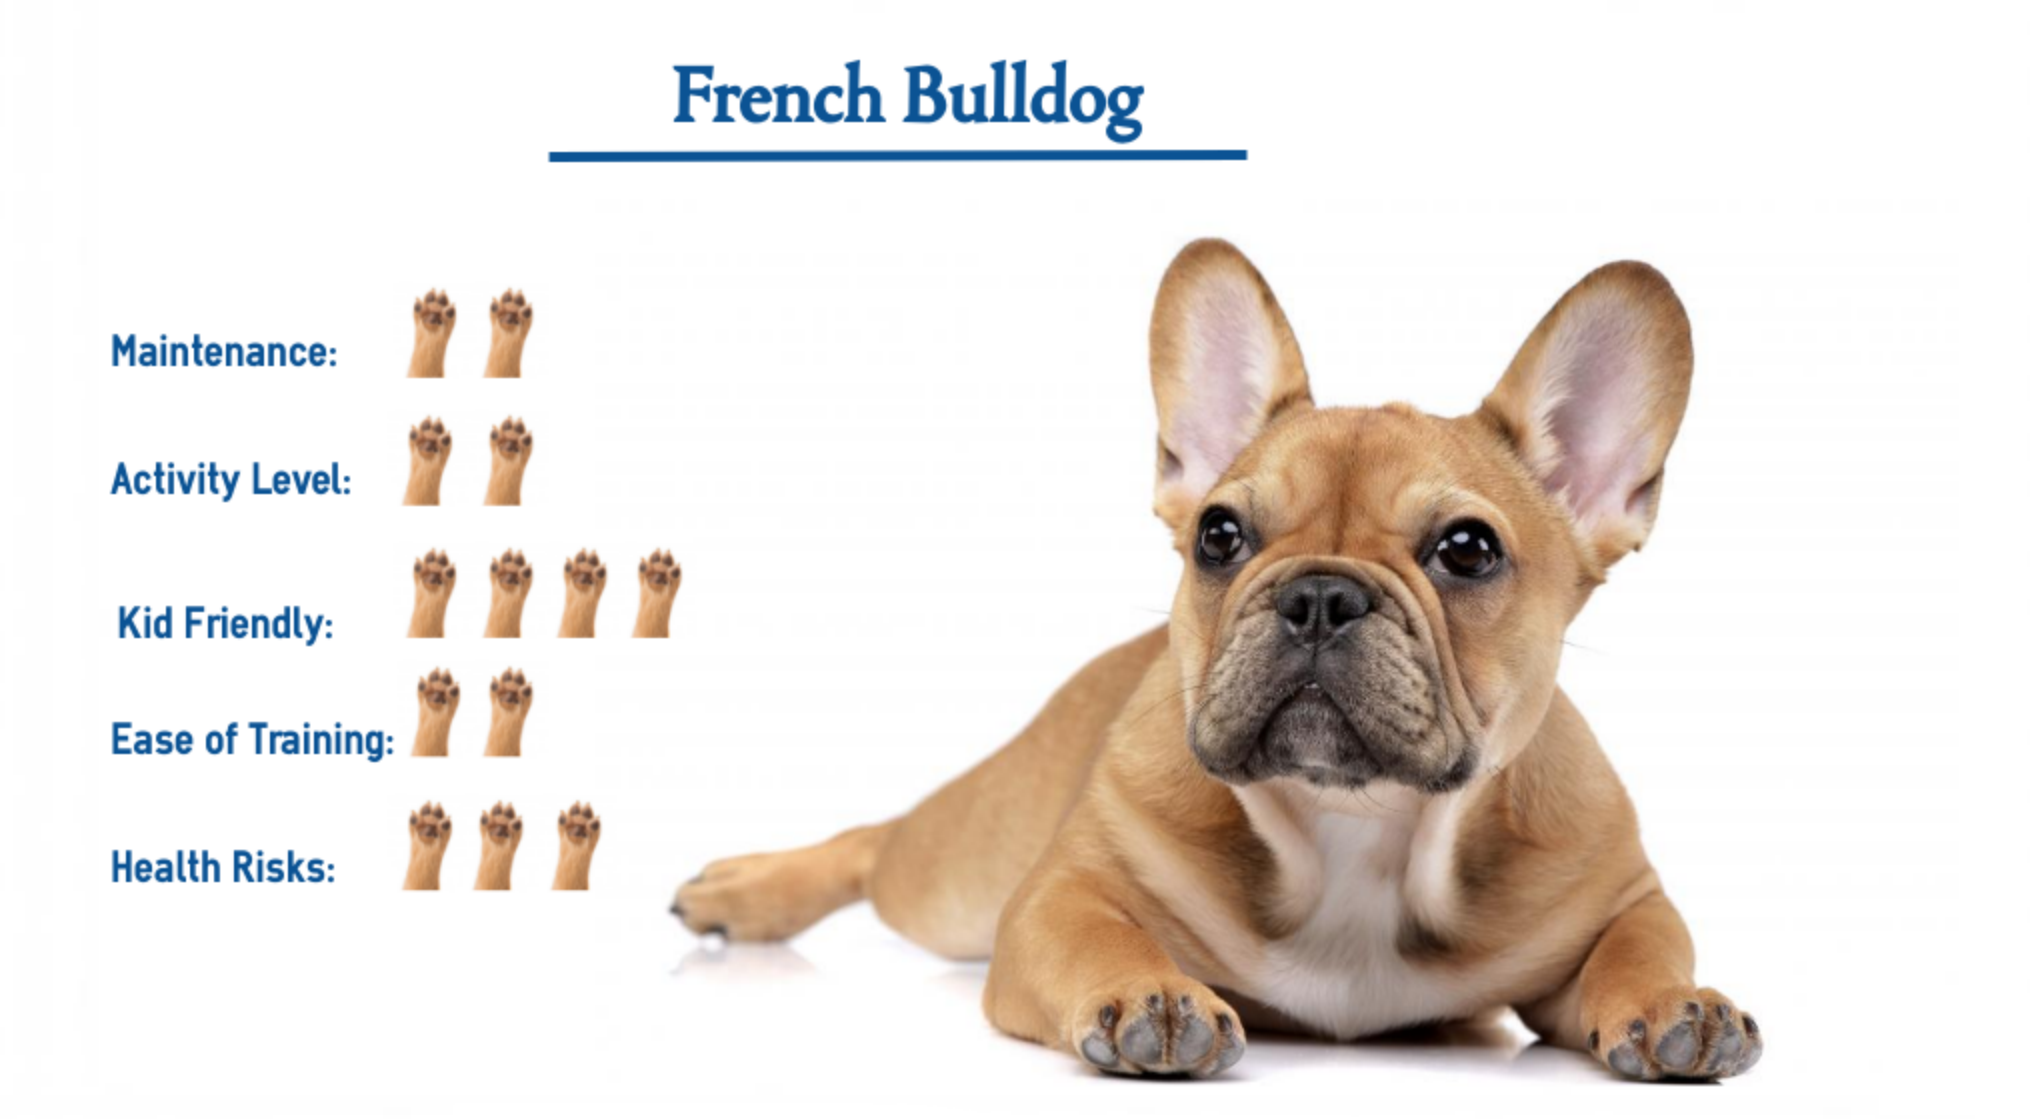 can french bulldogs kill rats? 2